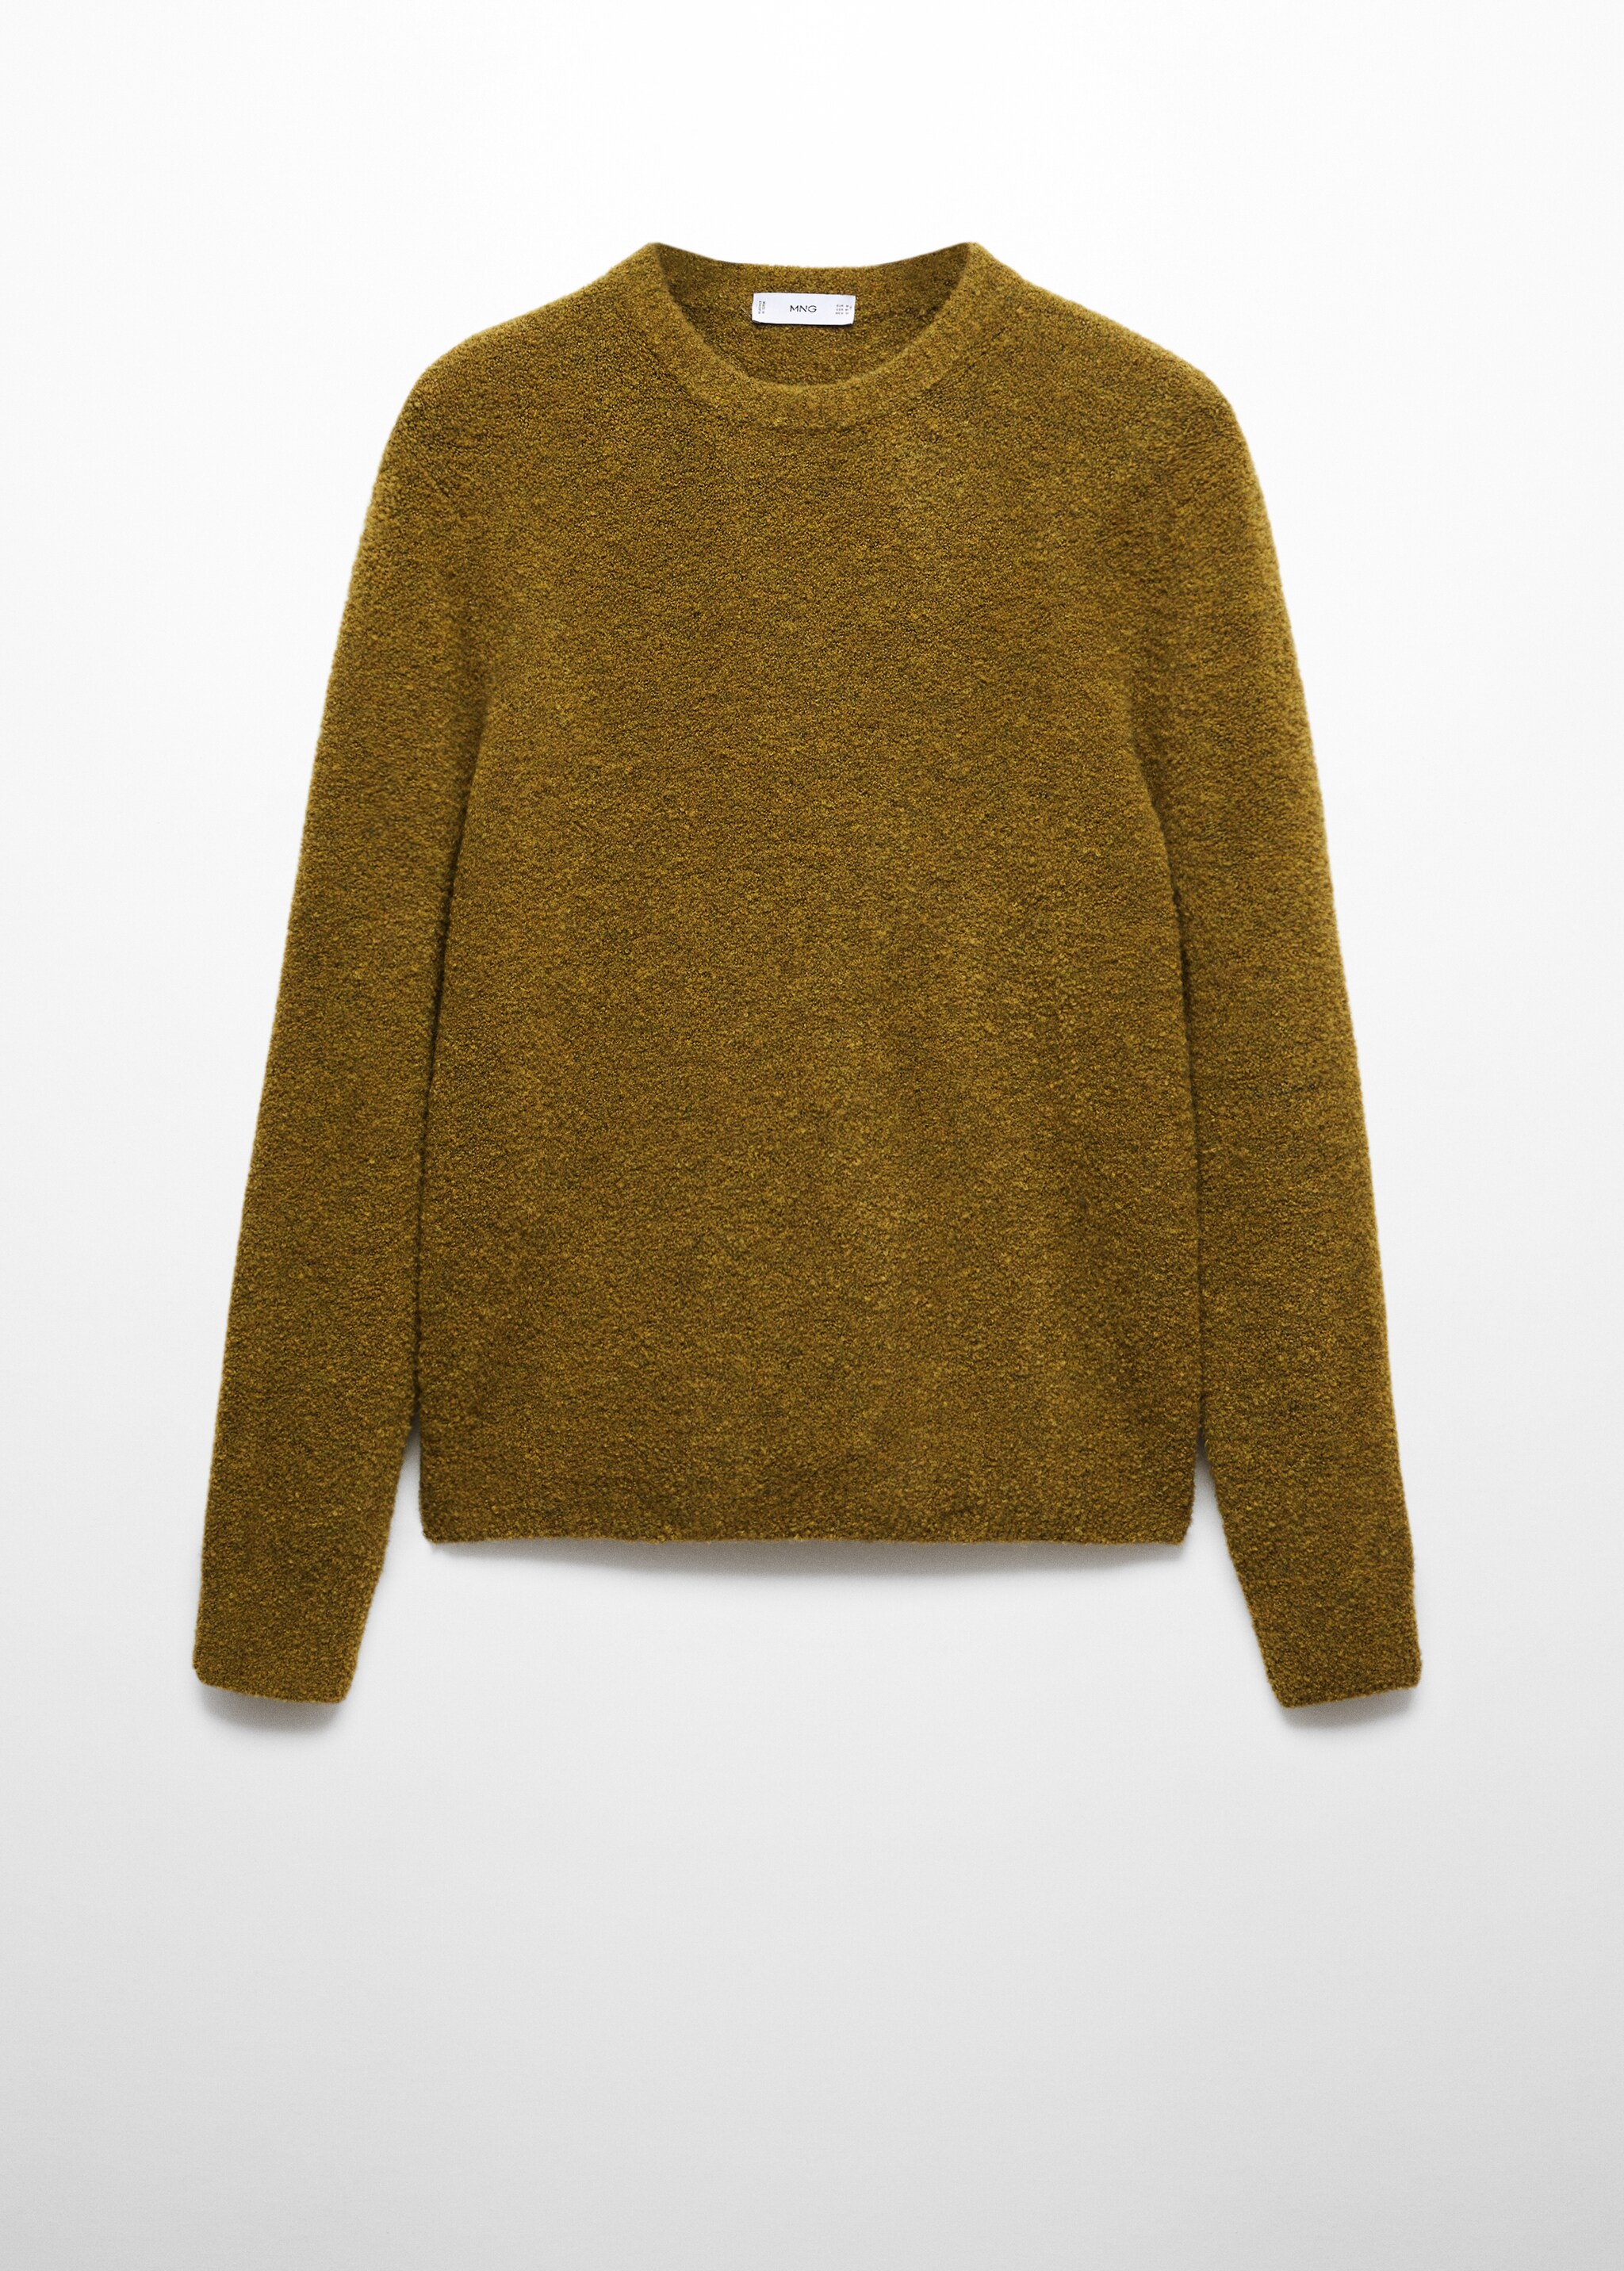 Bouclé knit sweater - Article without model